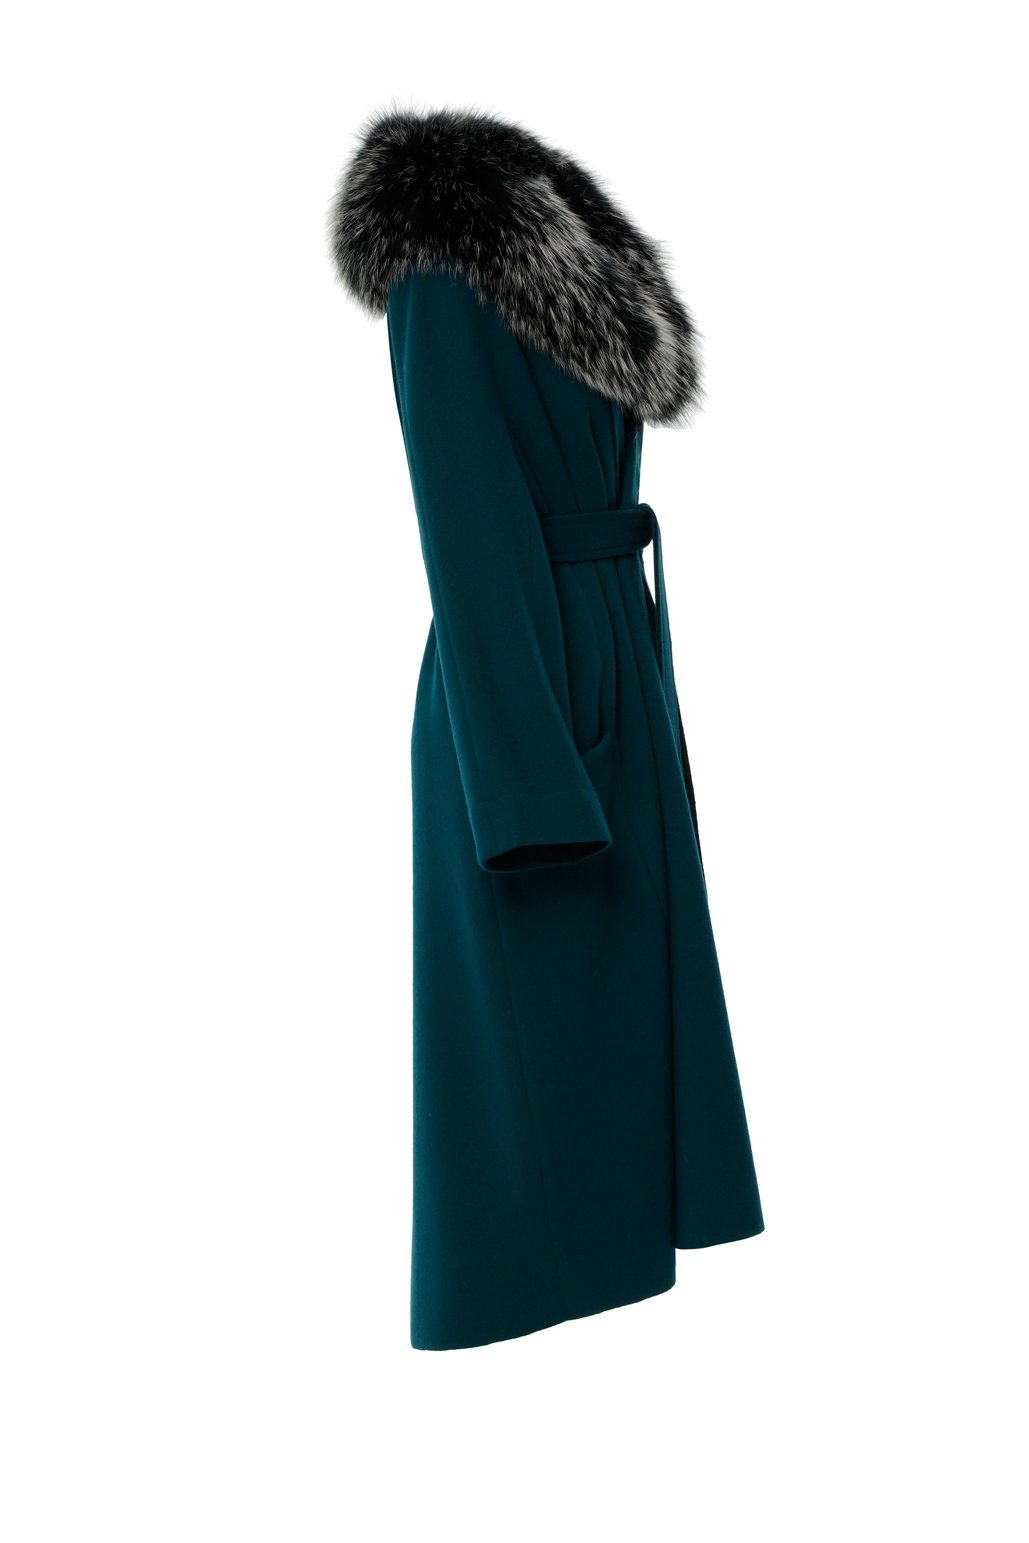 Fur Collar Detailed Cachet Green Coat